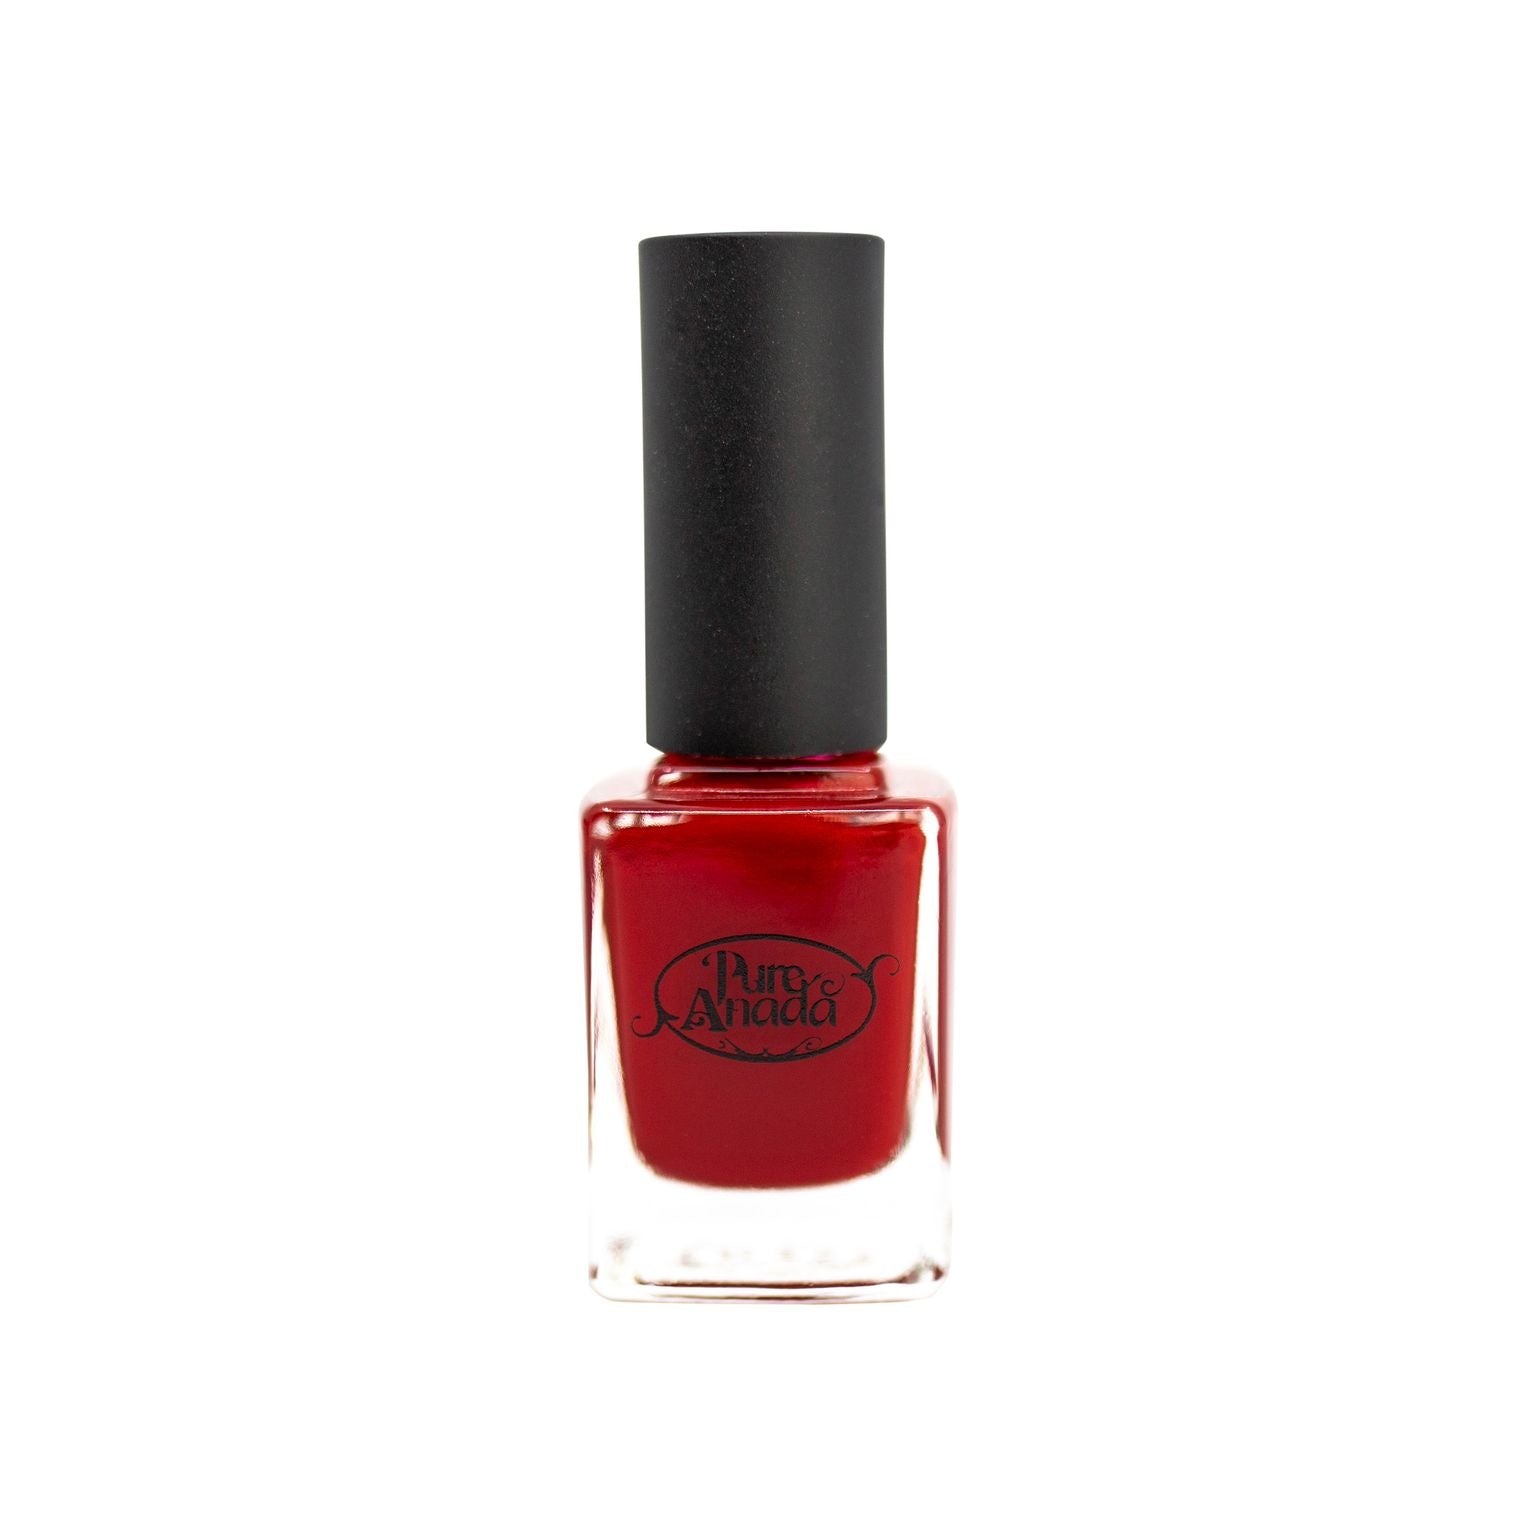 Pure Anada Glamour Nail Polish Ravishing Red 12mL